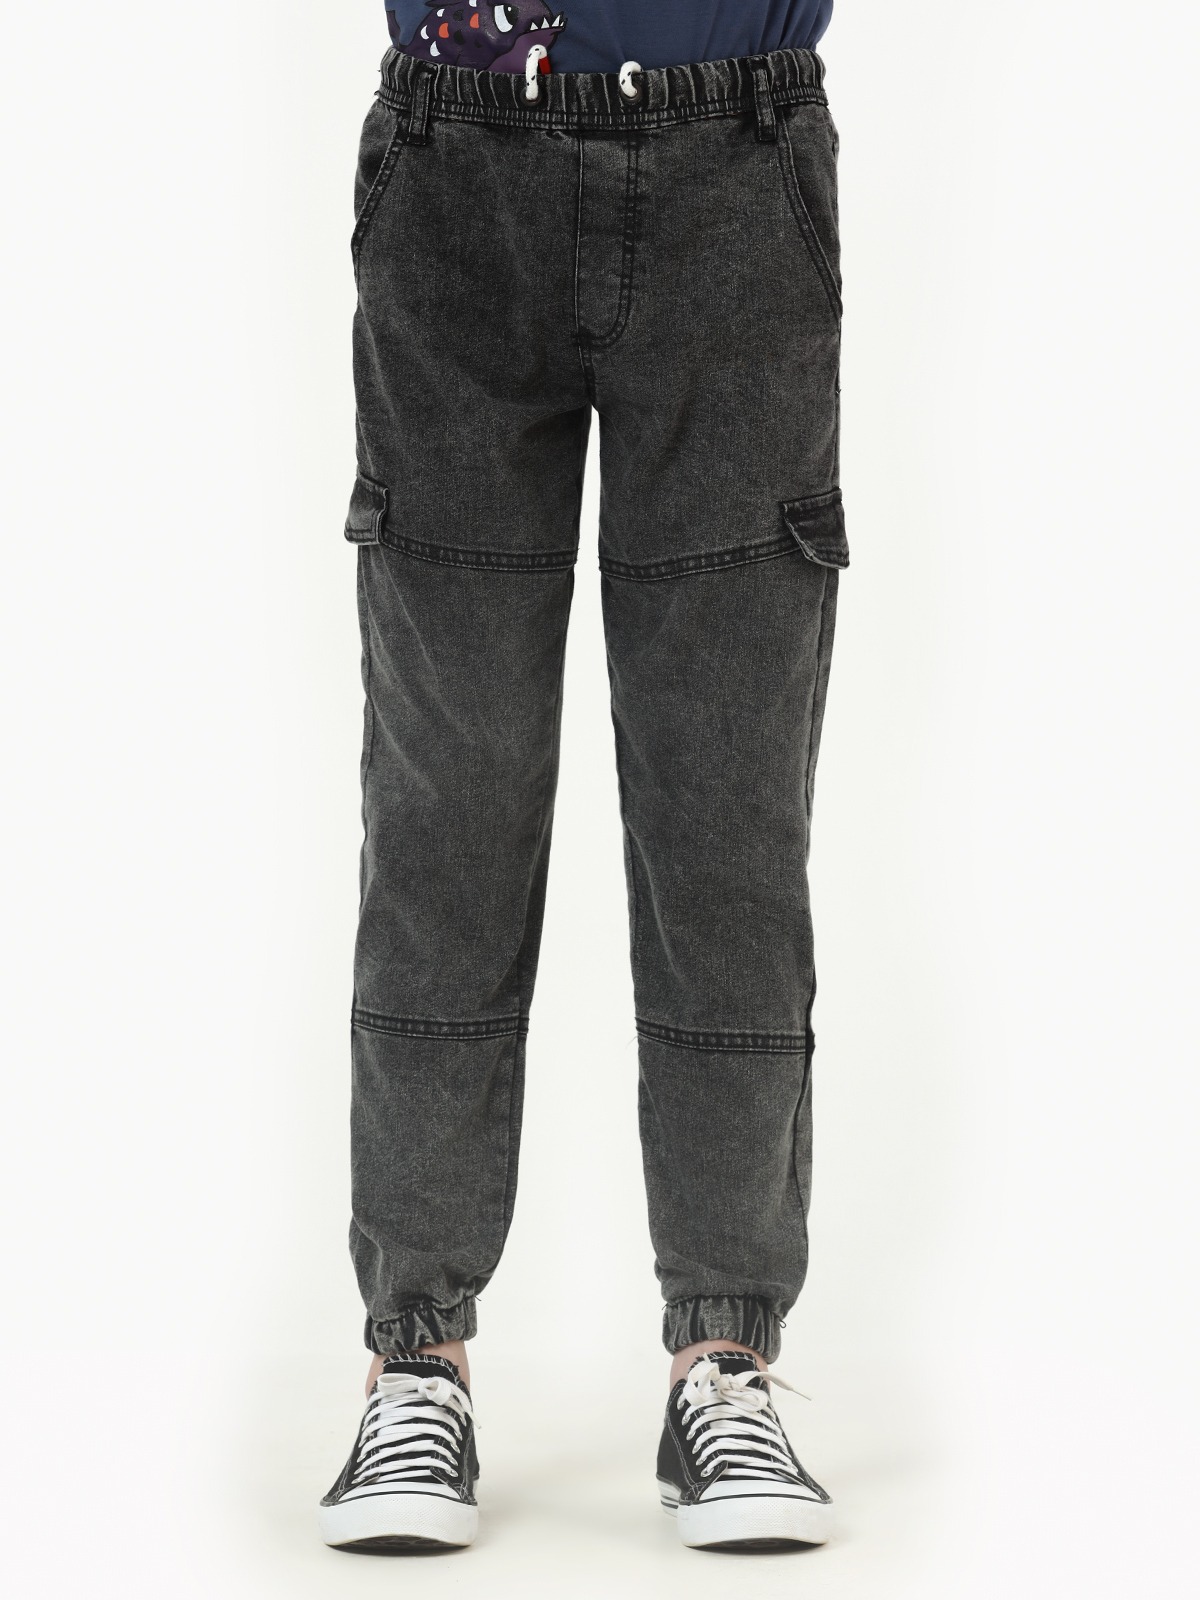 Boy's Charcoal Trouser - EBBT22-011